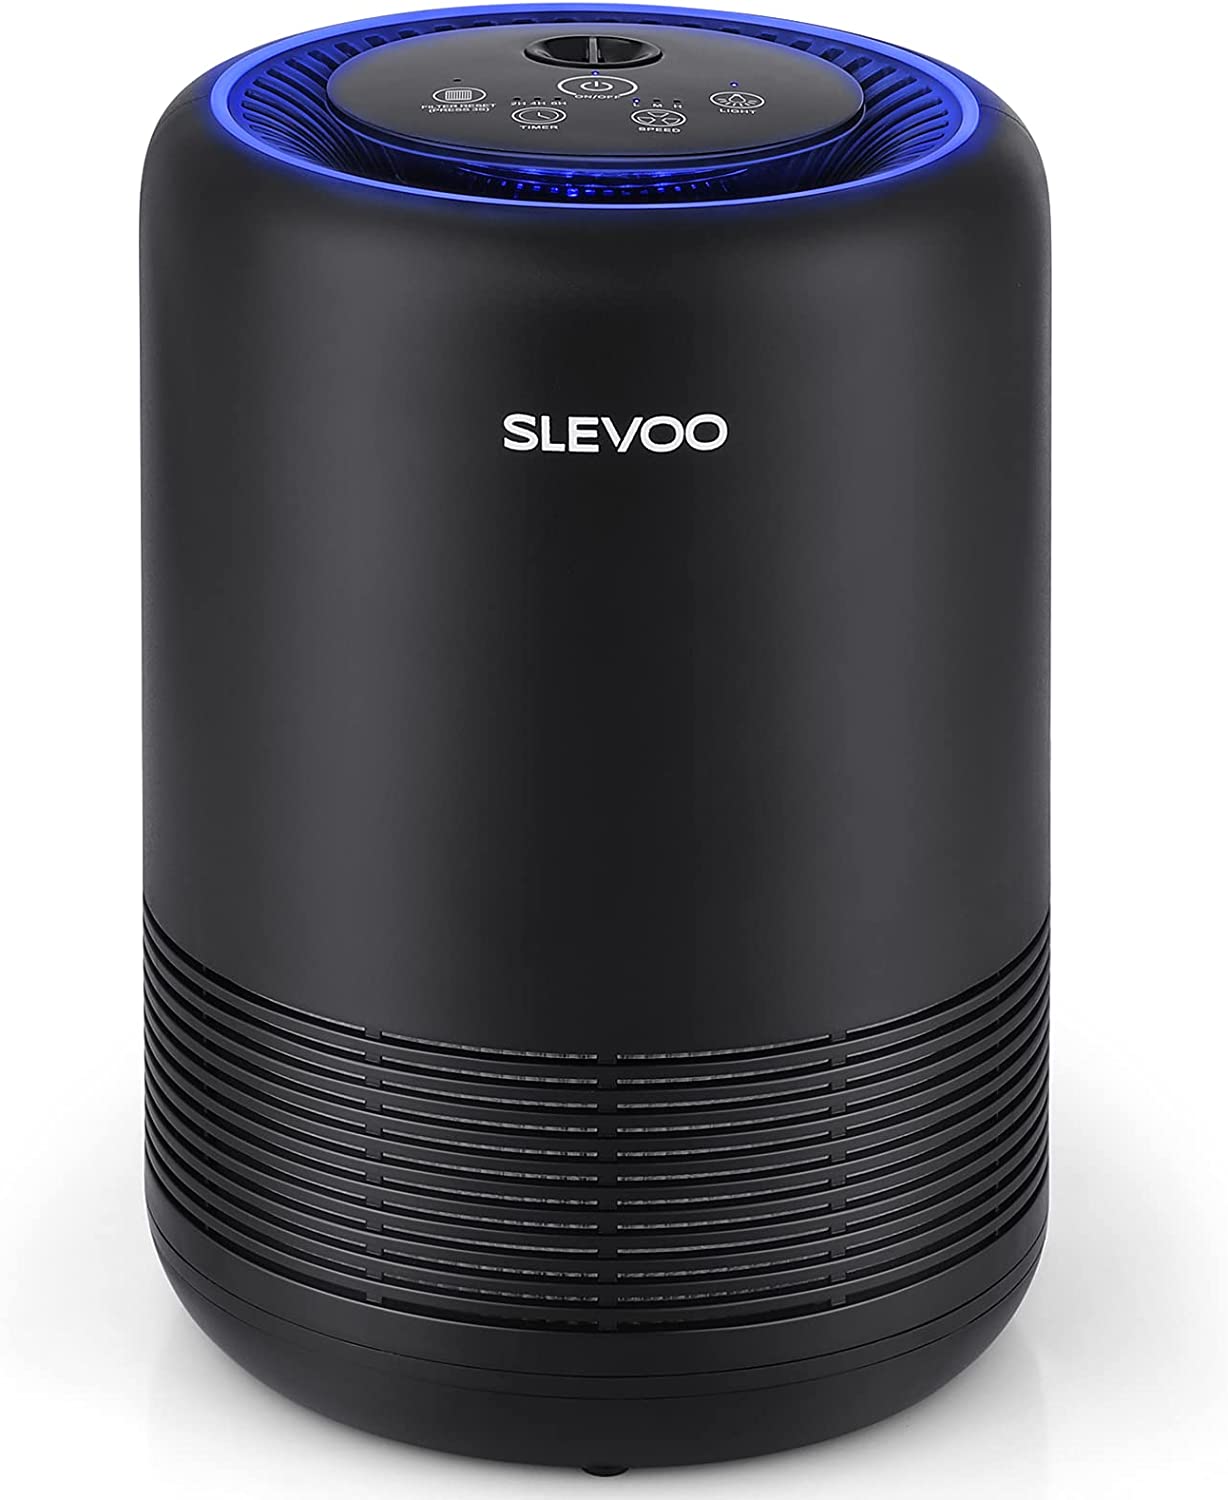 Slevoo BS-01 Air Purifiers for Home Bedroom, H13 True HEPA Filter